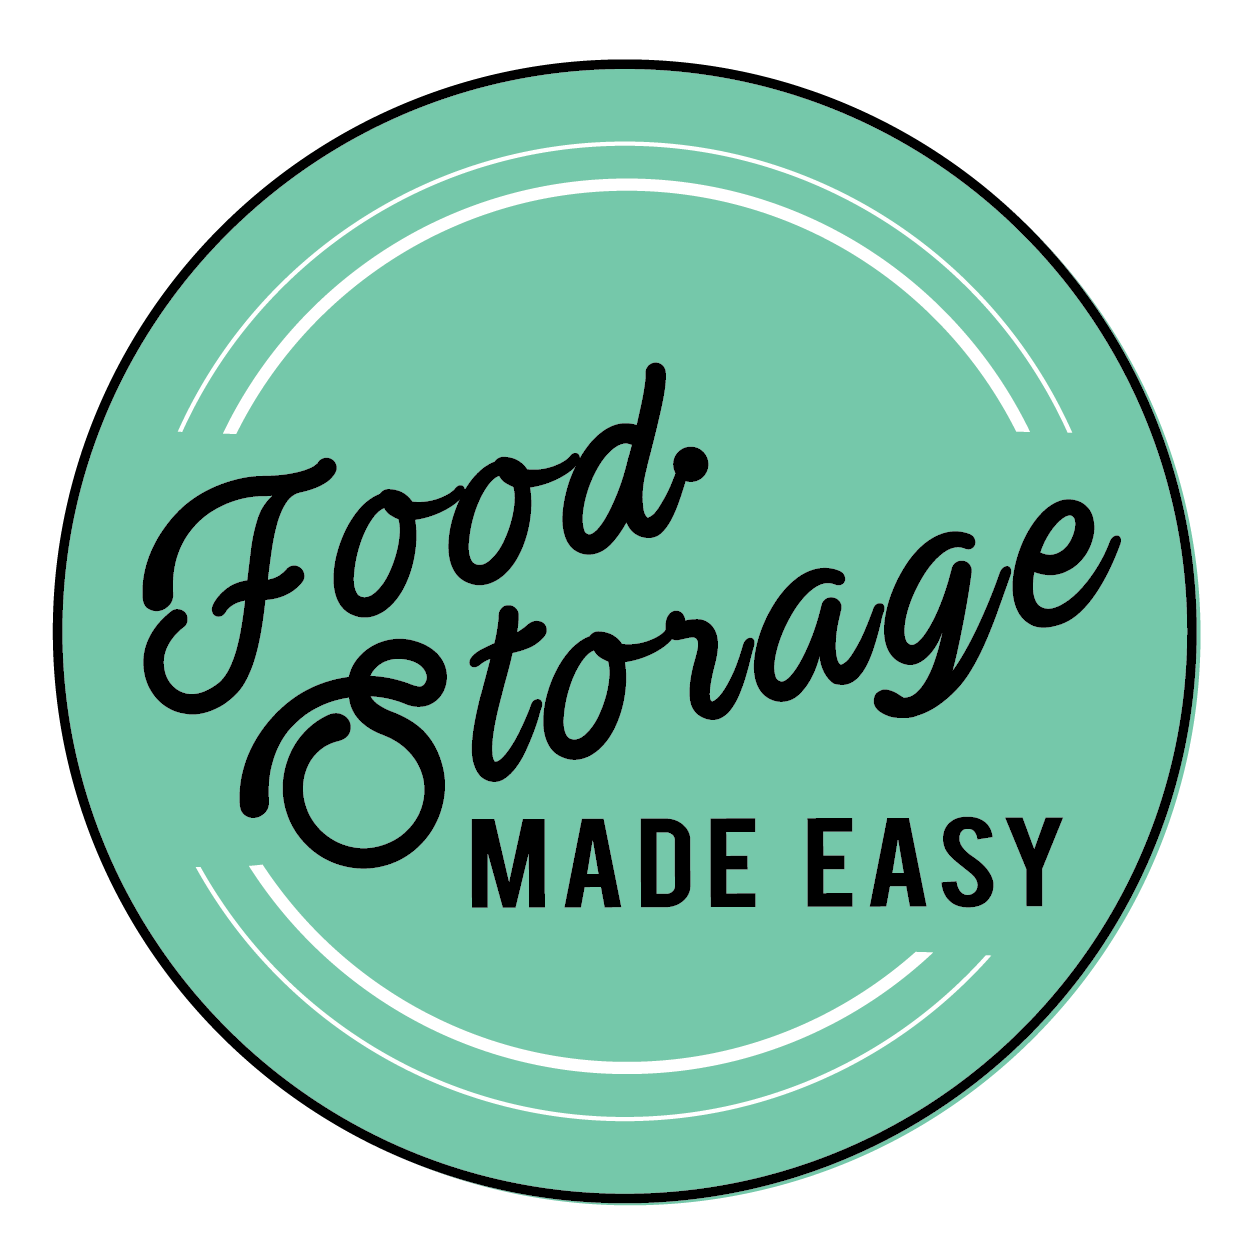 Food Storage Made Easy